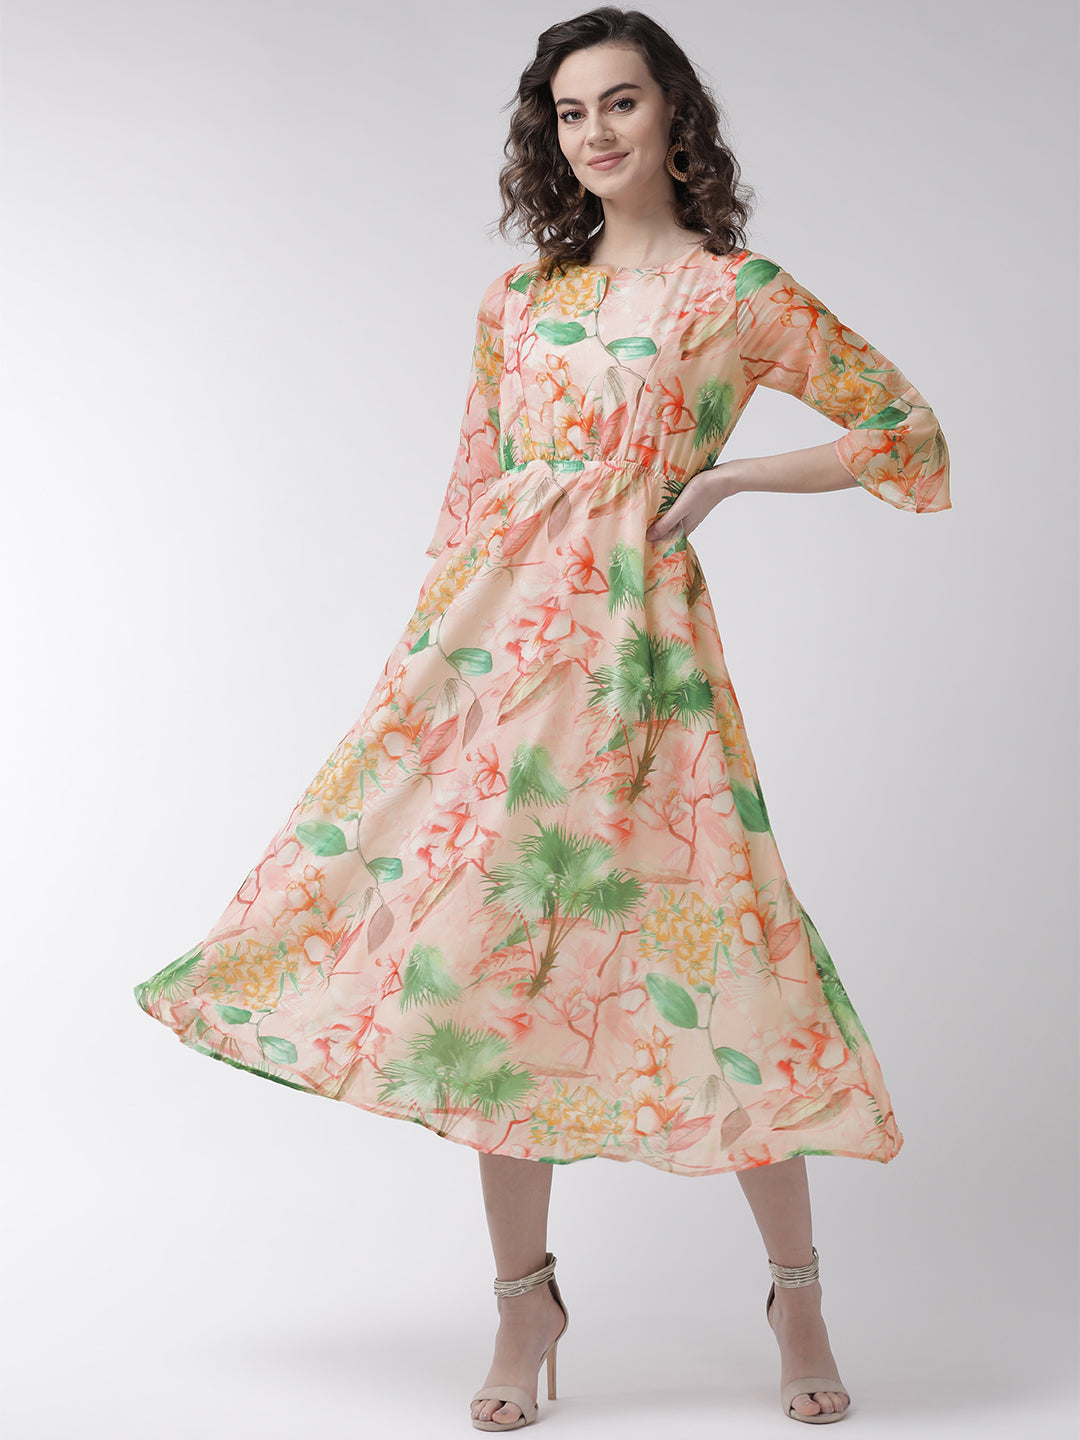 Women Peach-Colored & Green Floral Print A-Line Dress